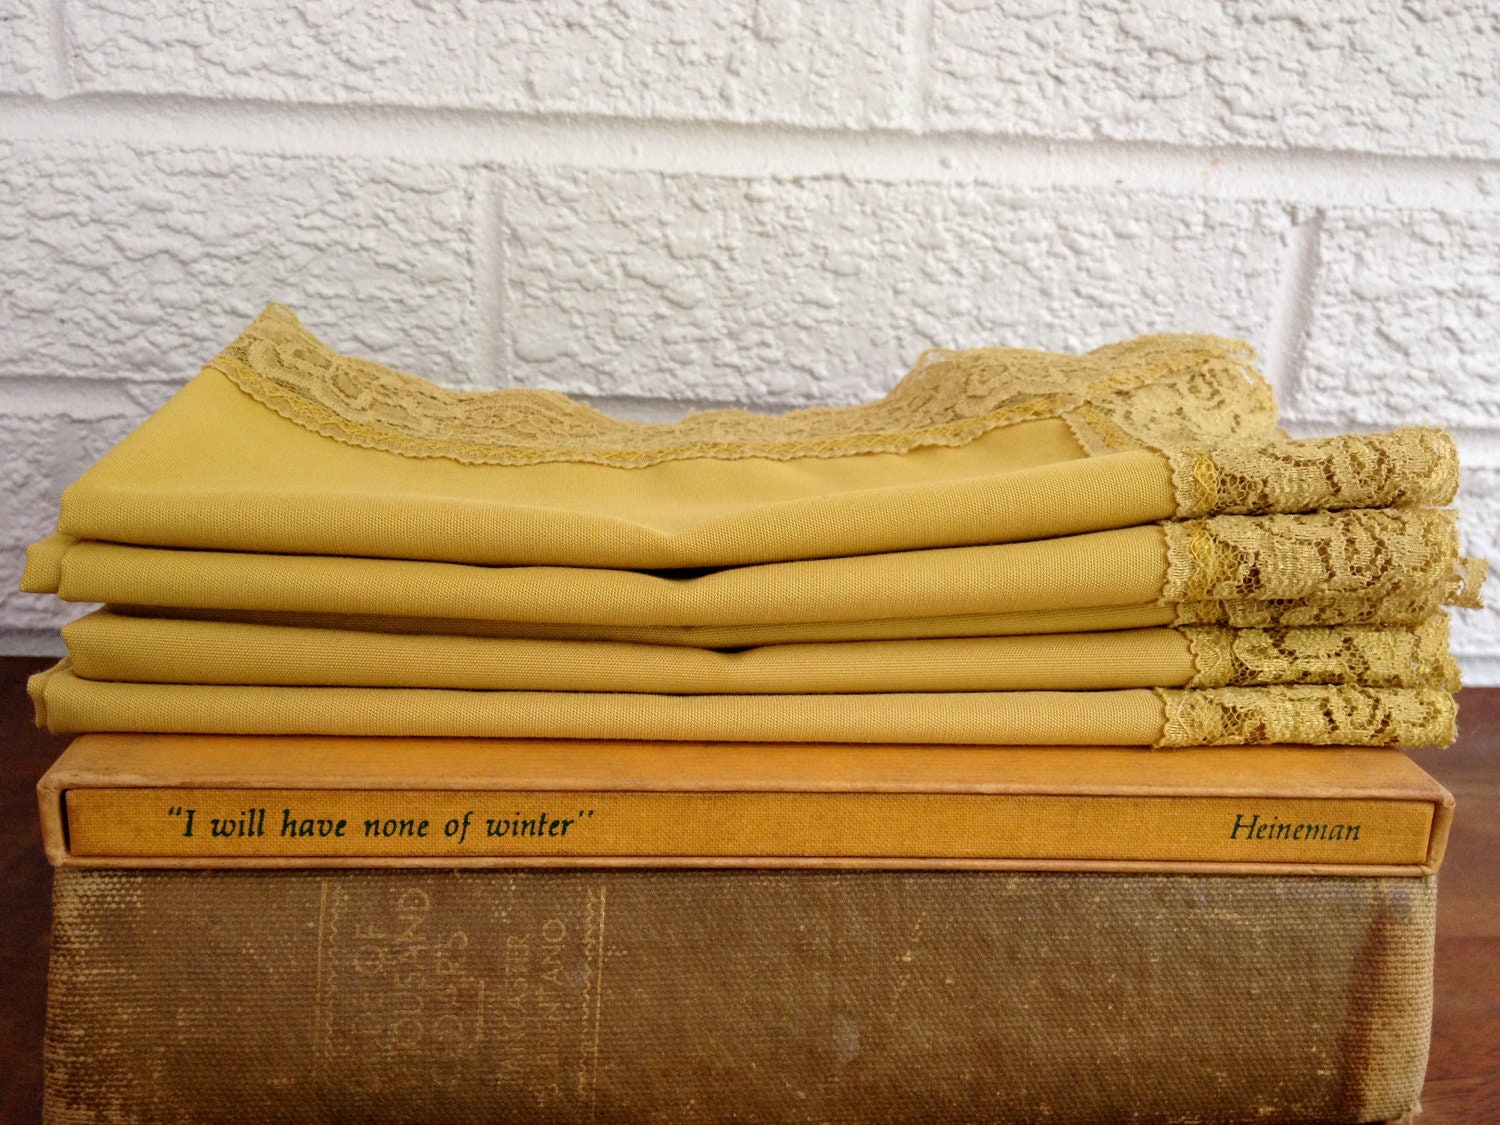 Set of 5 Vintage Mustard Yellow Lace-Trimmed Handkerchiefs/Napkins